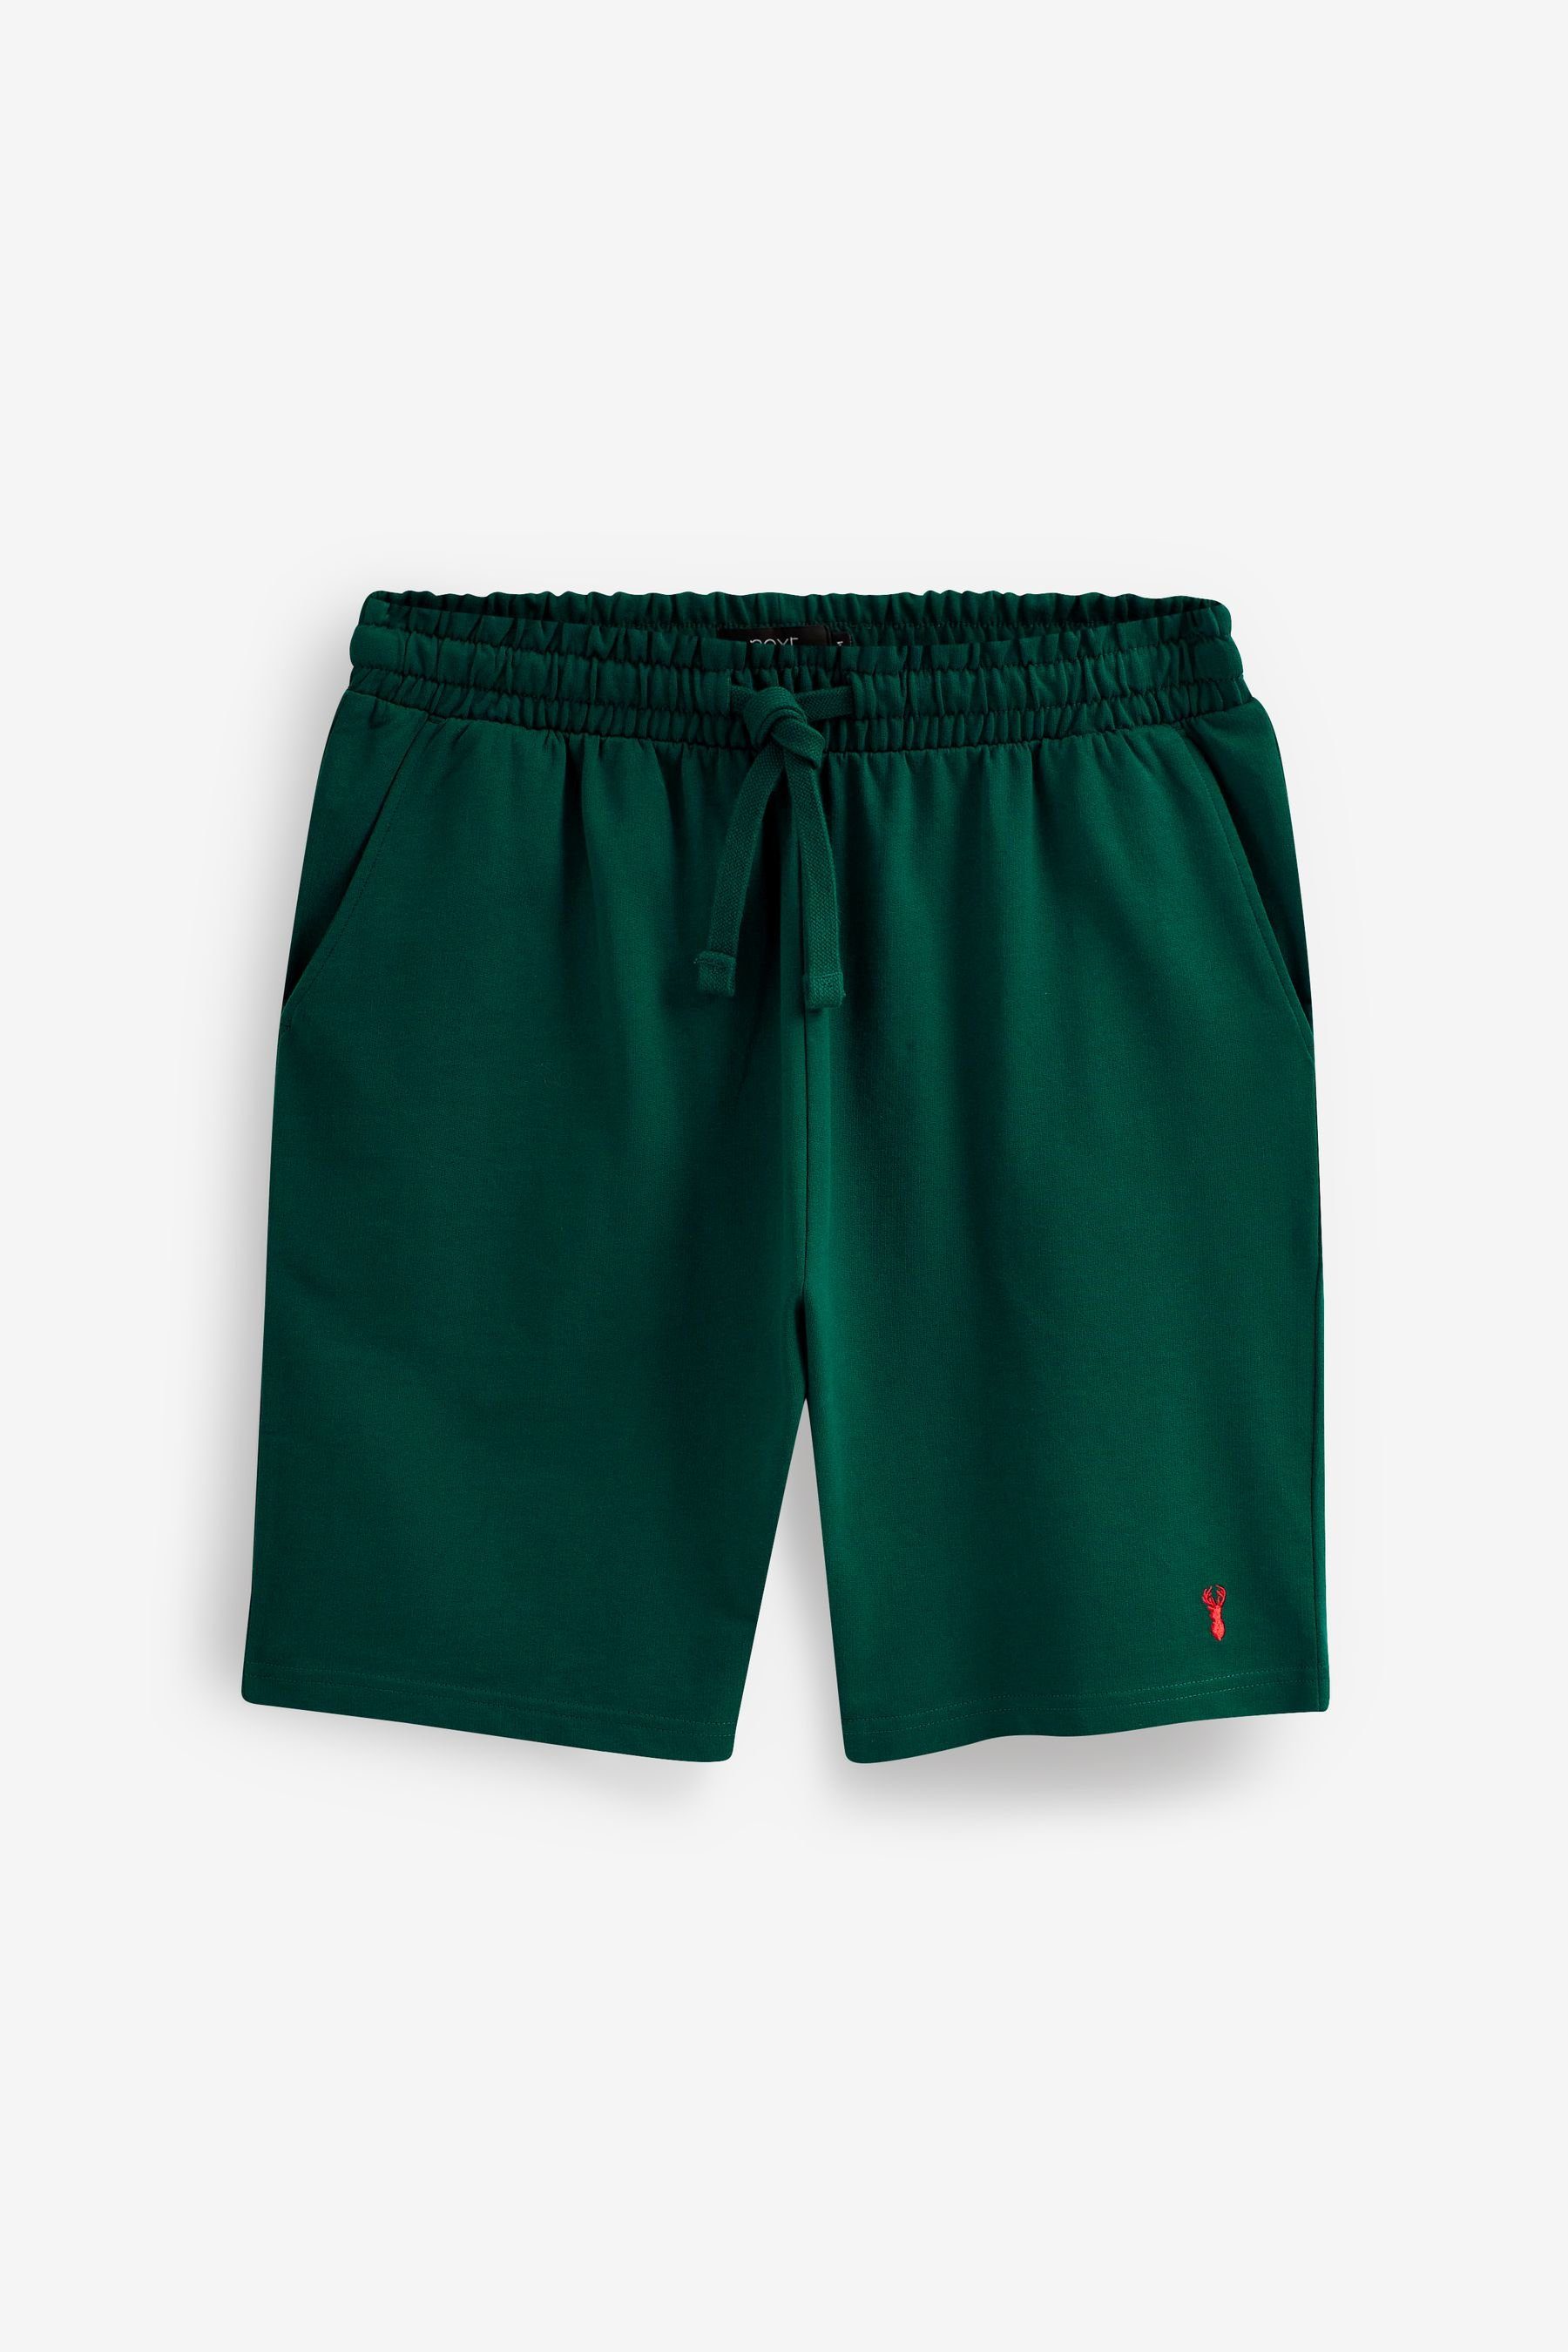 Green/Navy Next Blue Leichte Schlafshorts Shorts, 2er-Pack (2-tlg)